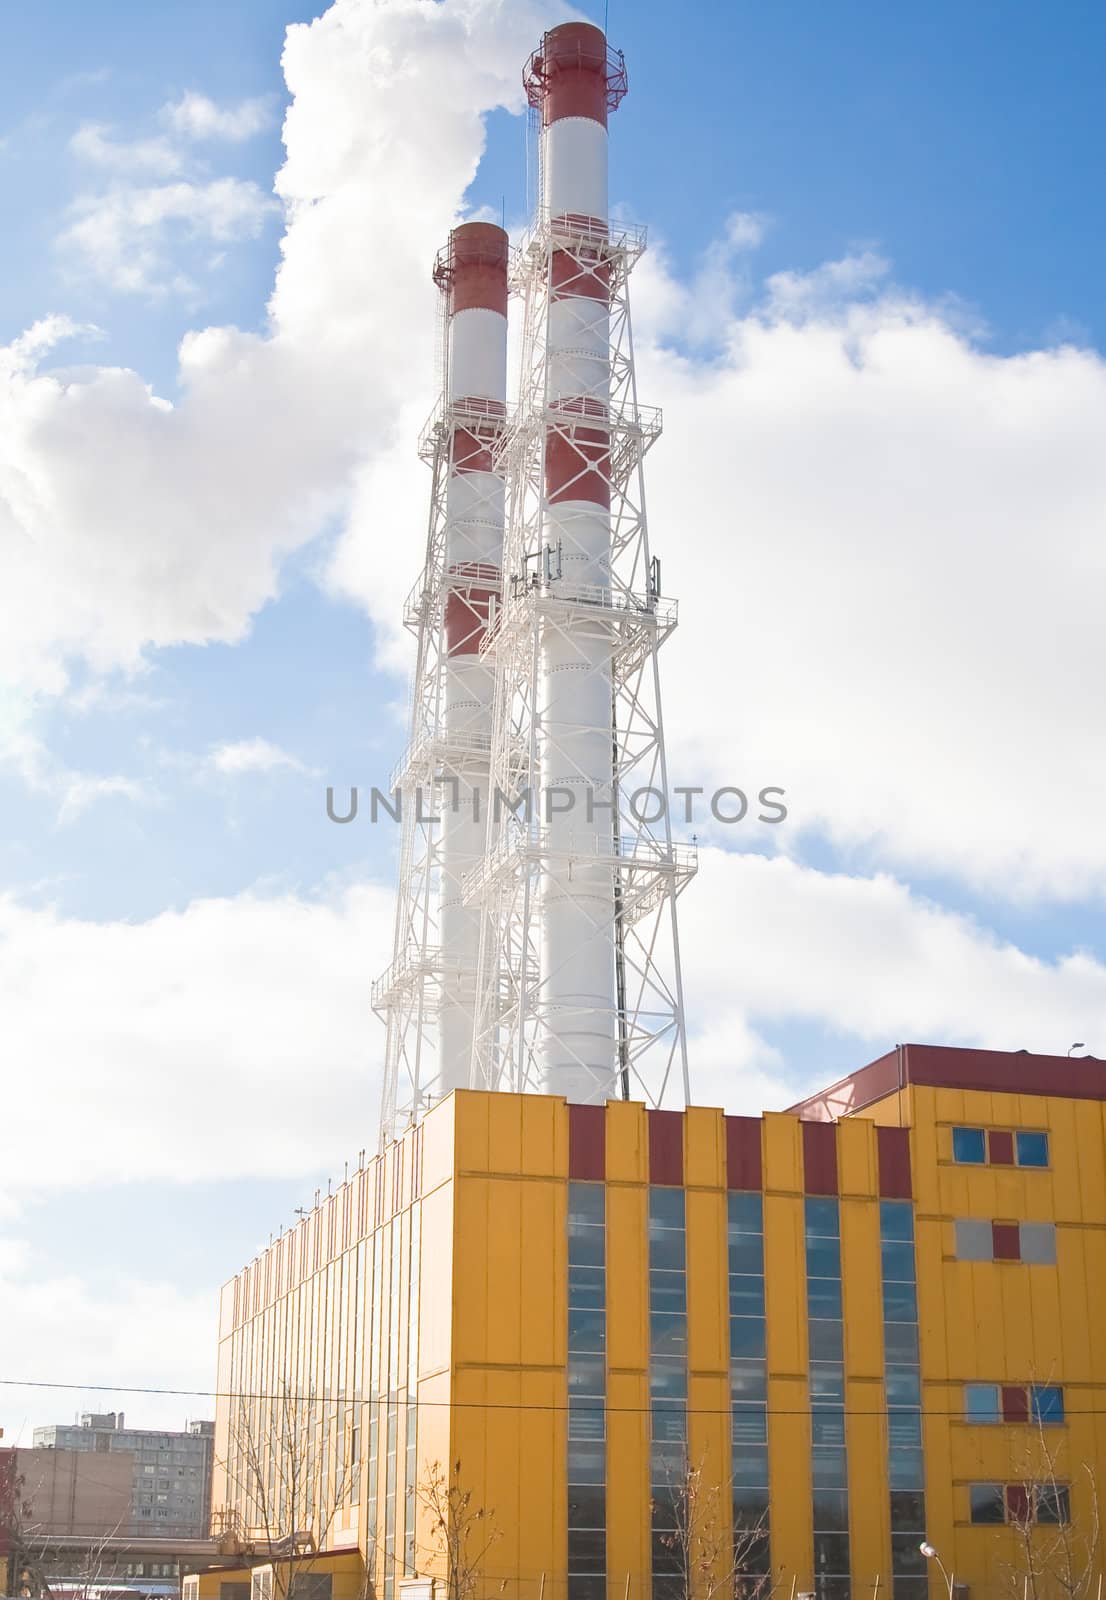 Thermal power plant by nikolpetr